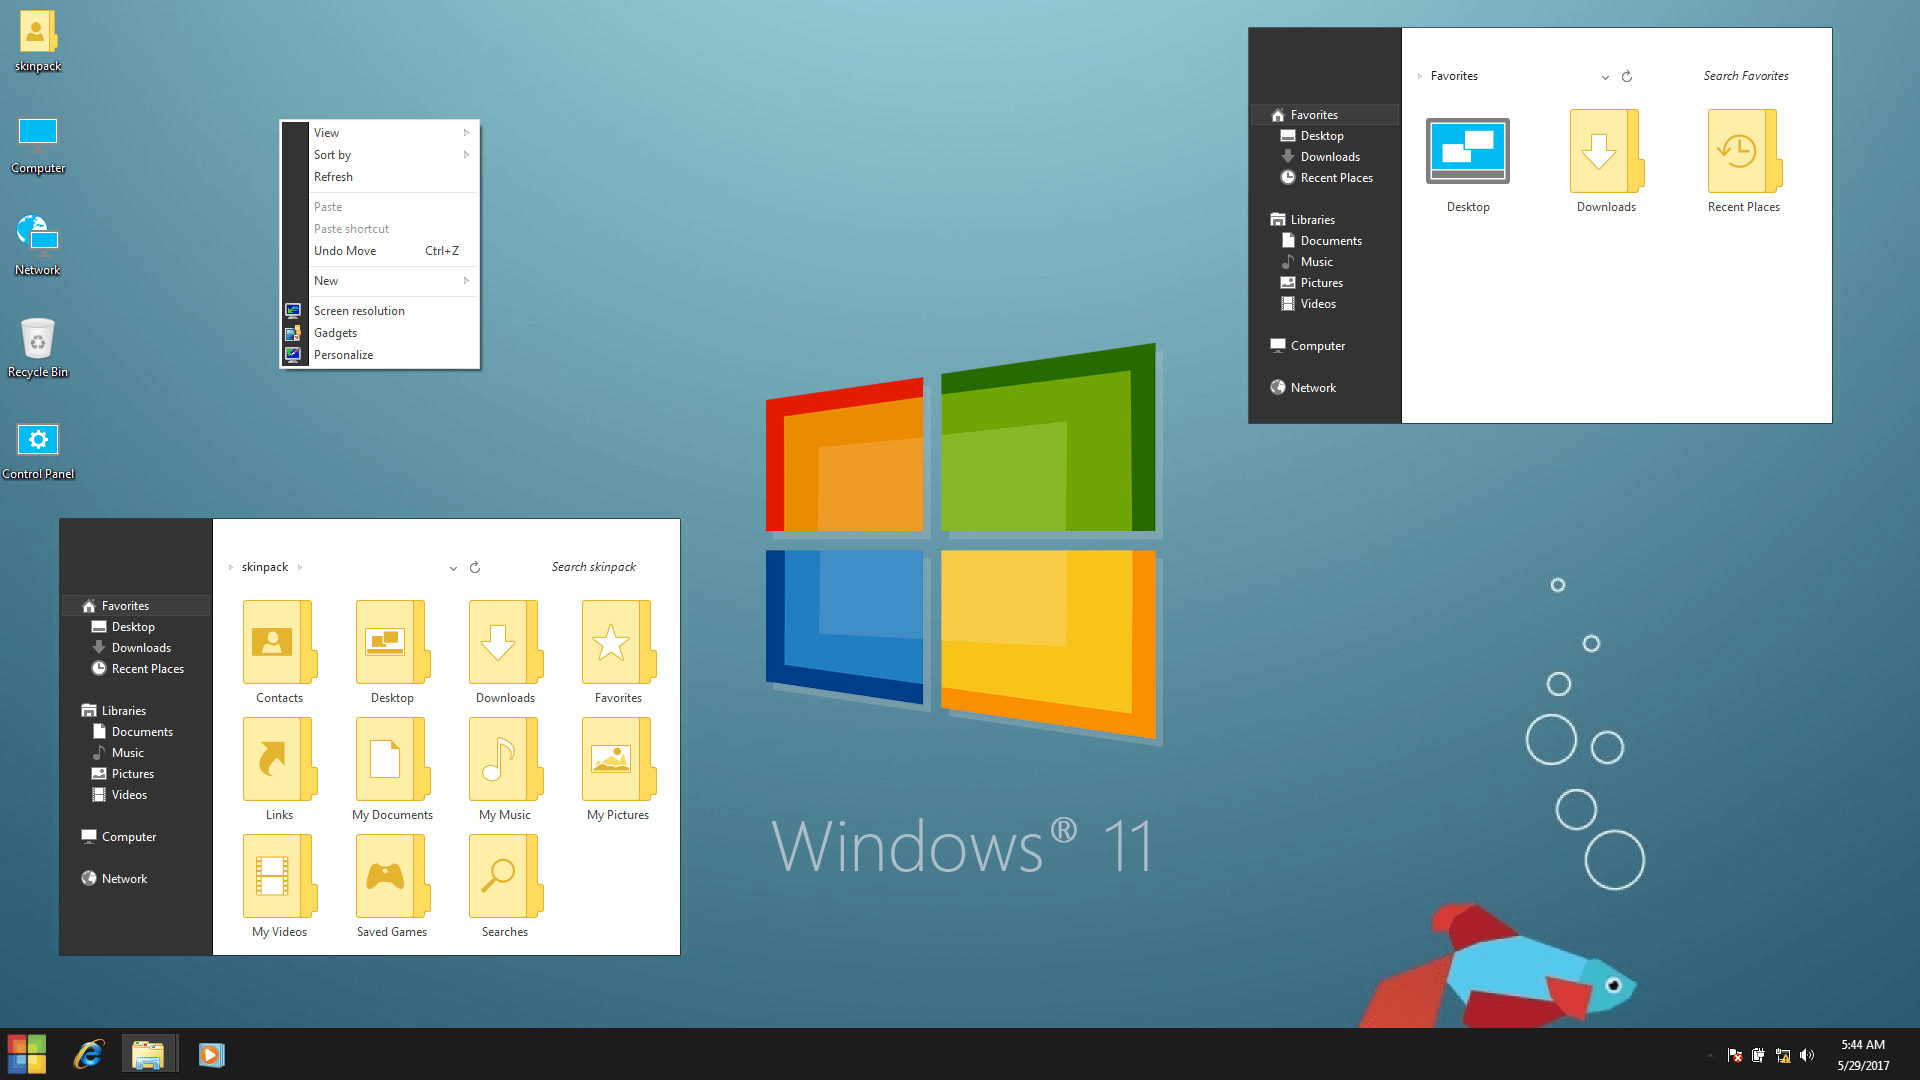 windows 11free download